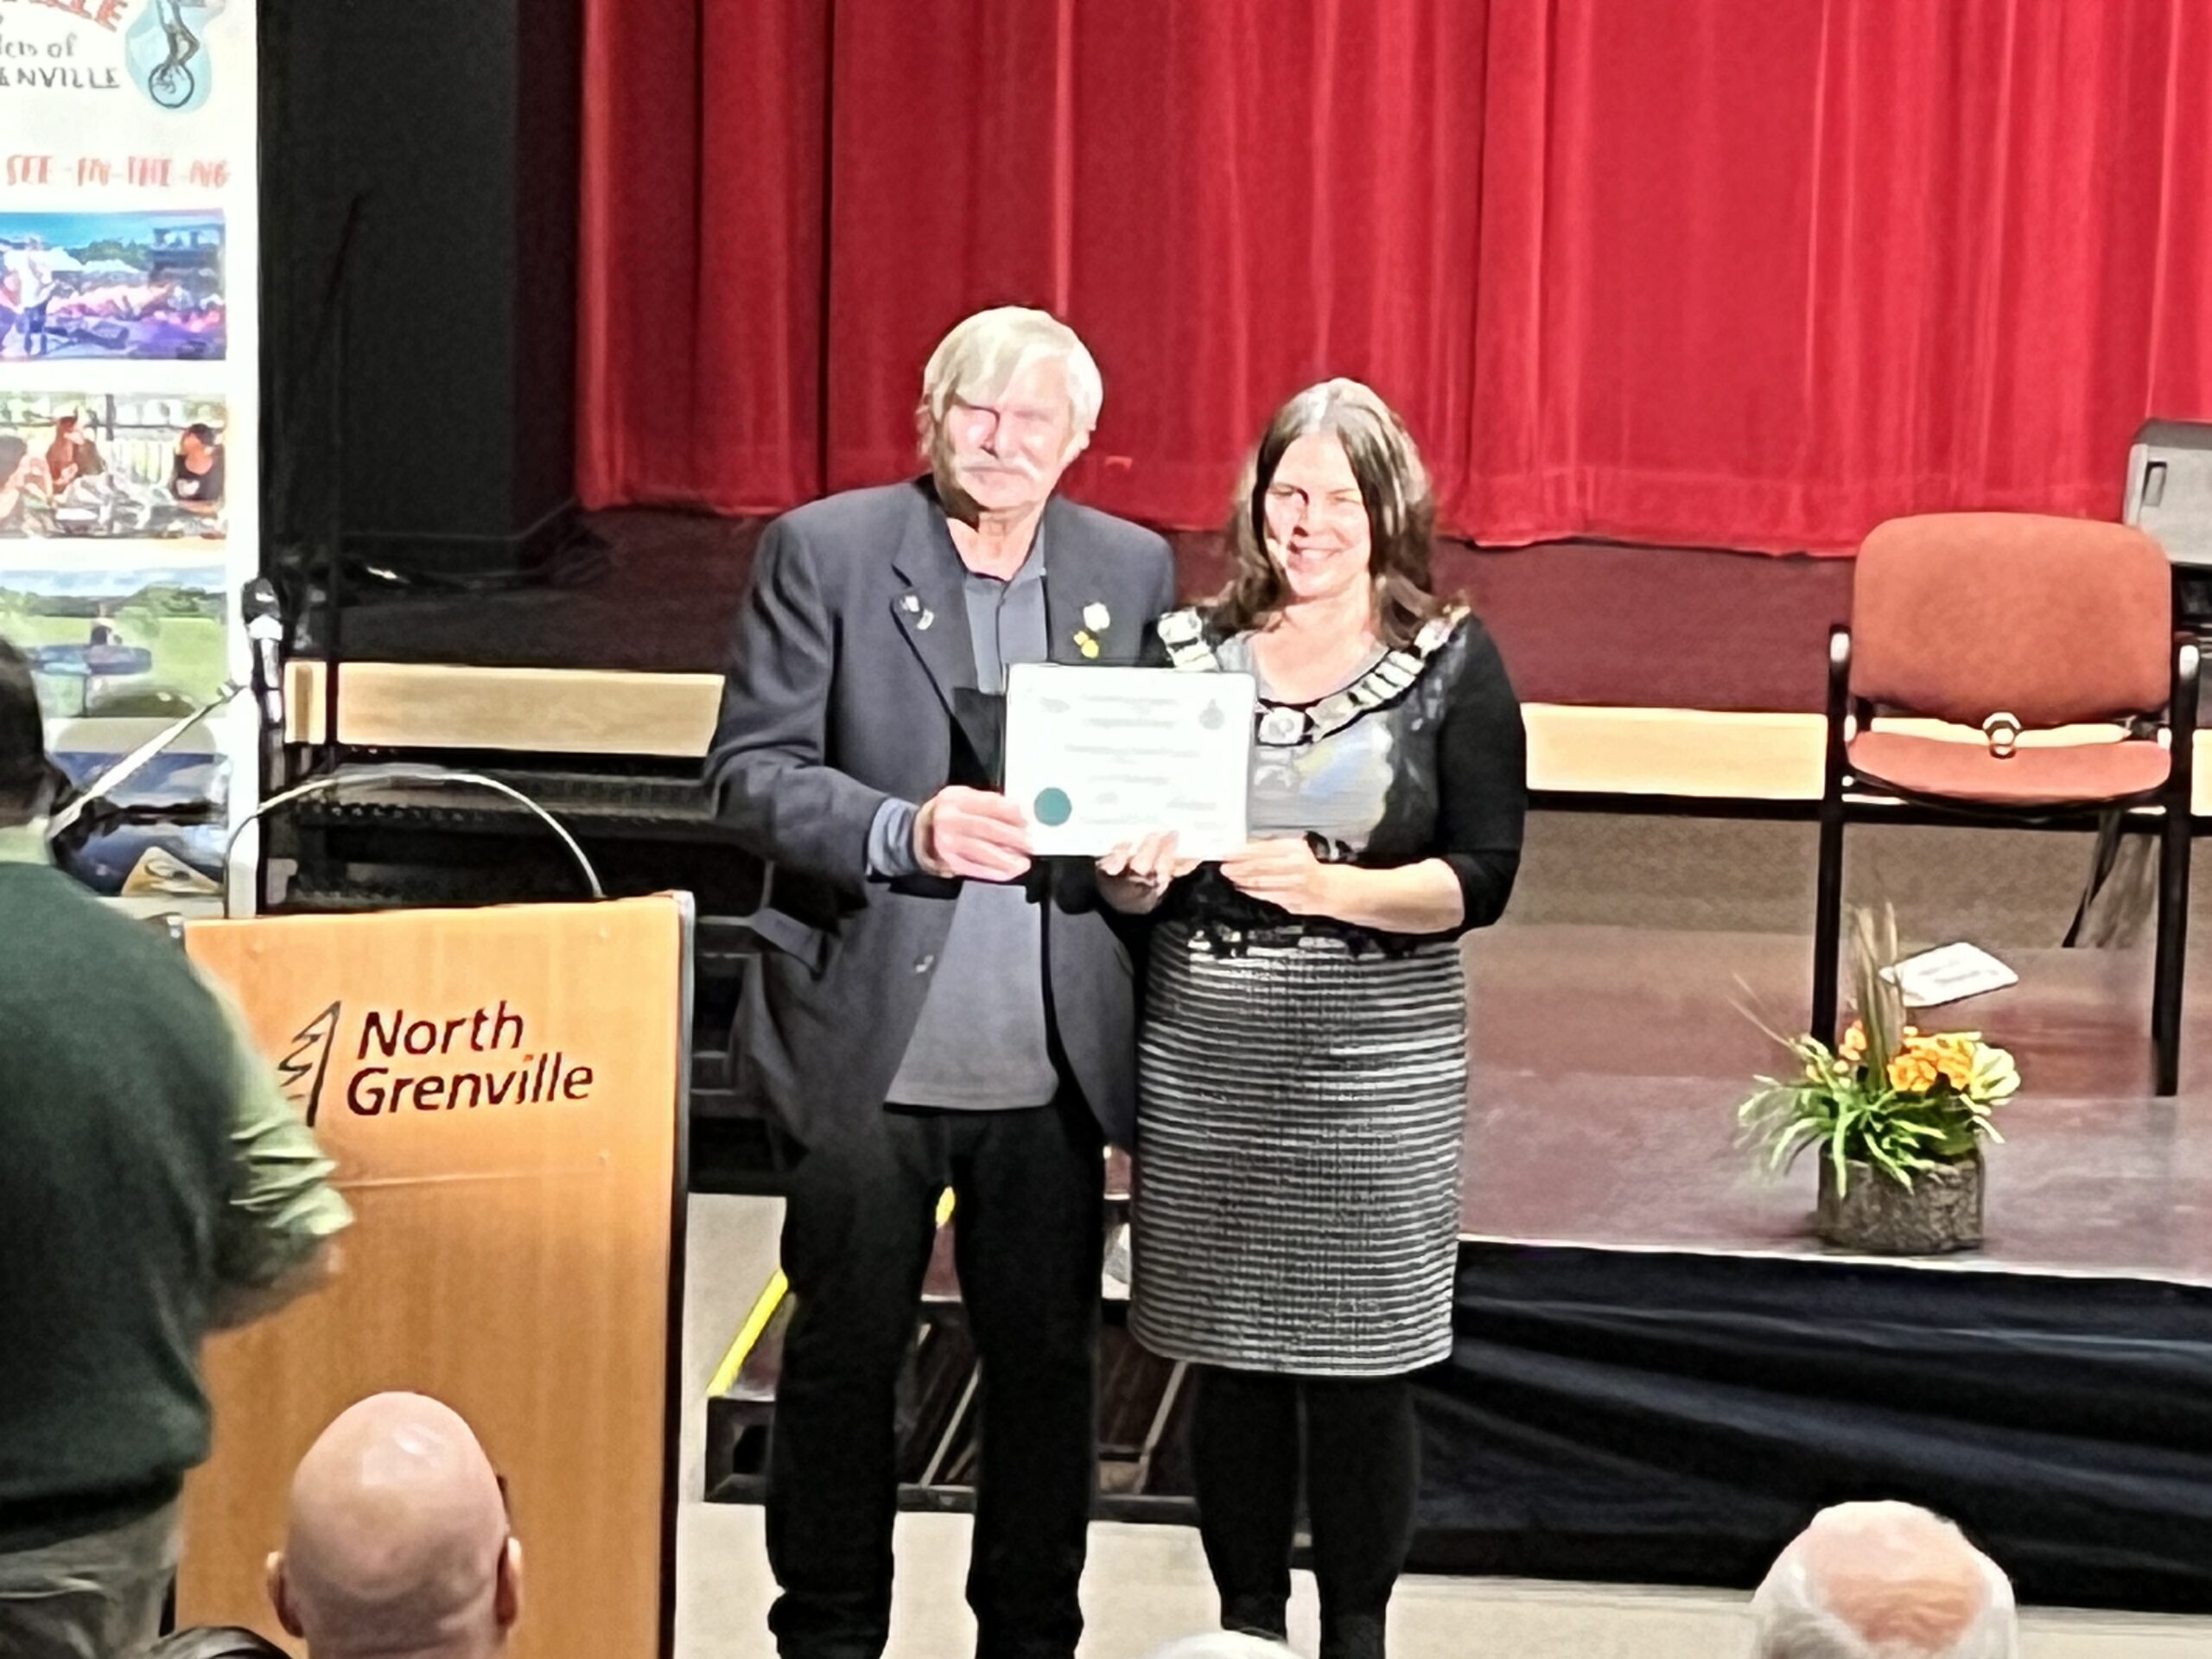 Deputy Mayor Wynands presenting North Grenville Mayor with congratulatory certificate